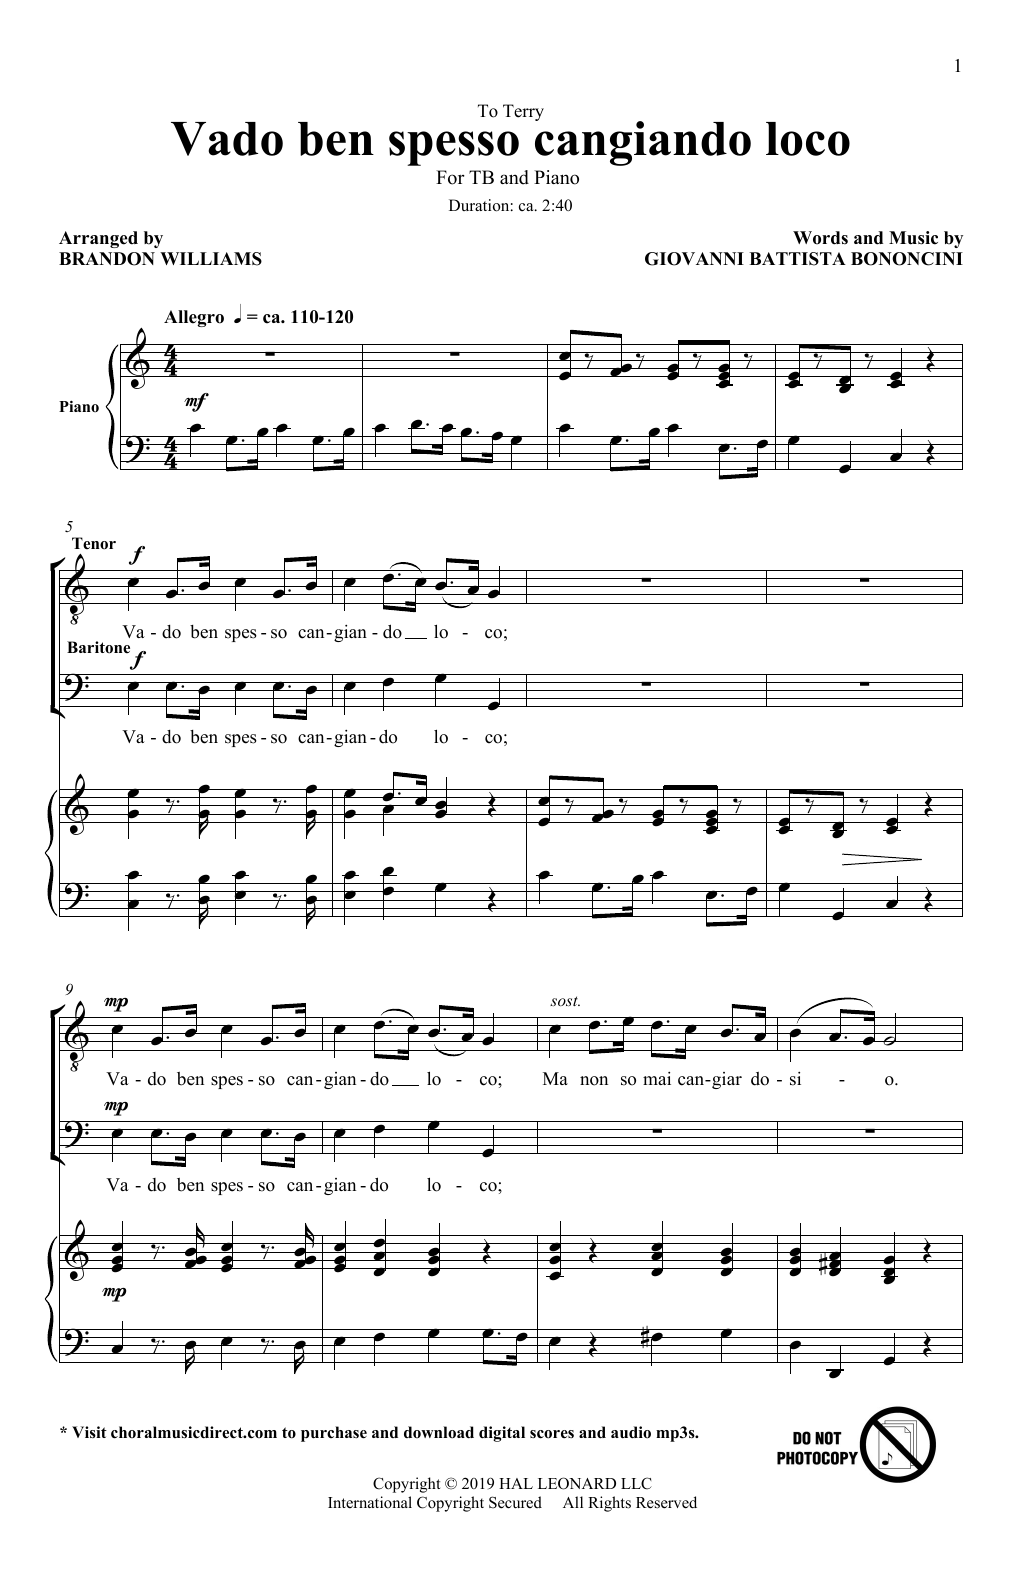 Giovanni Battista Bononcini Vado Ben Spesso Cangiando Loco (arr. Brandon Williams) sheet music notes and chords arranged for TB Choir